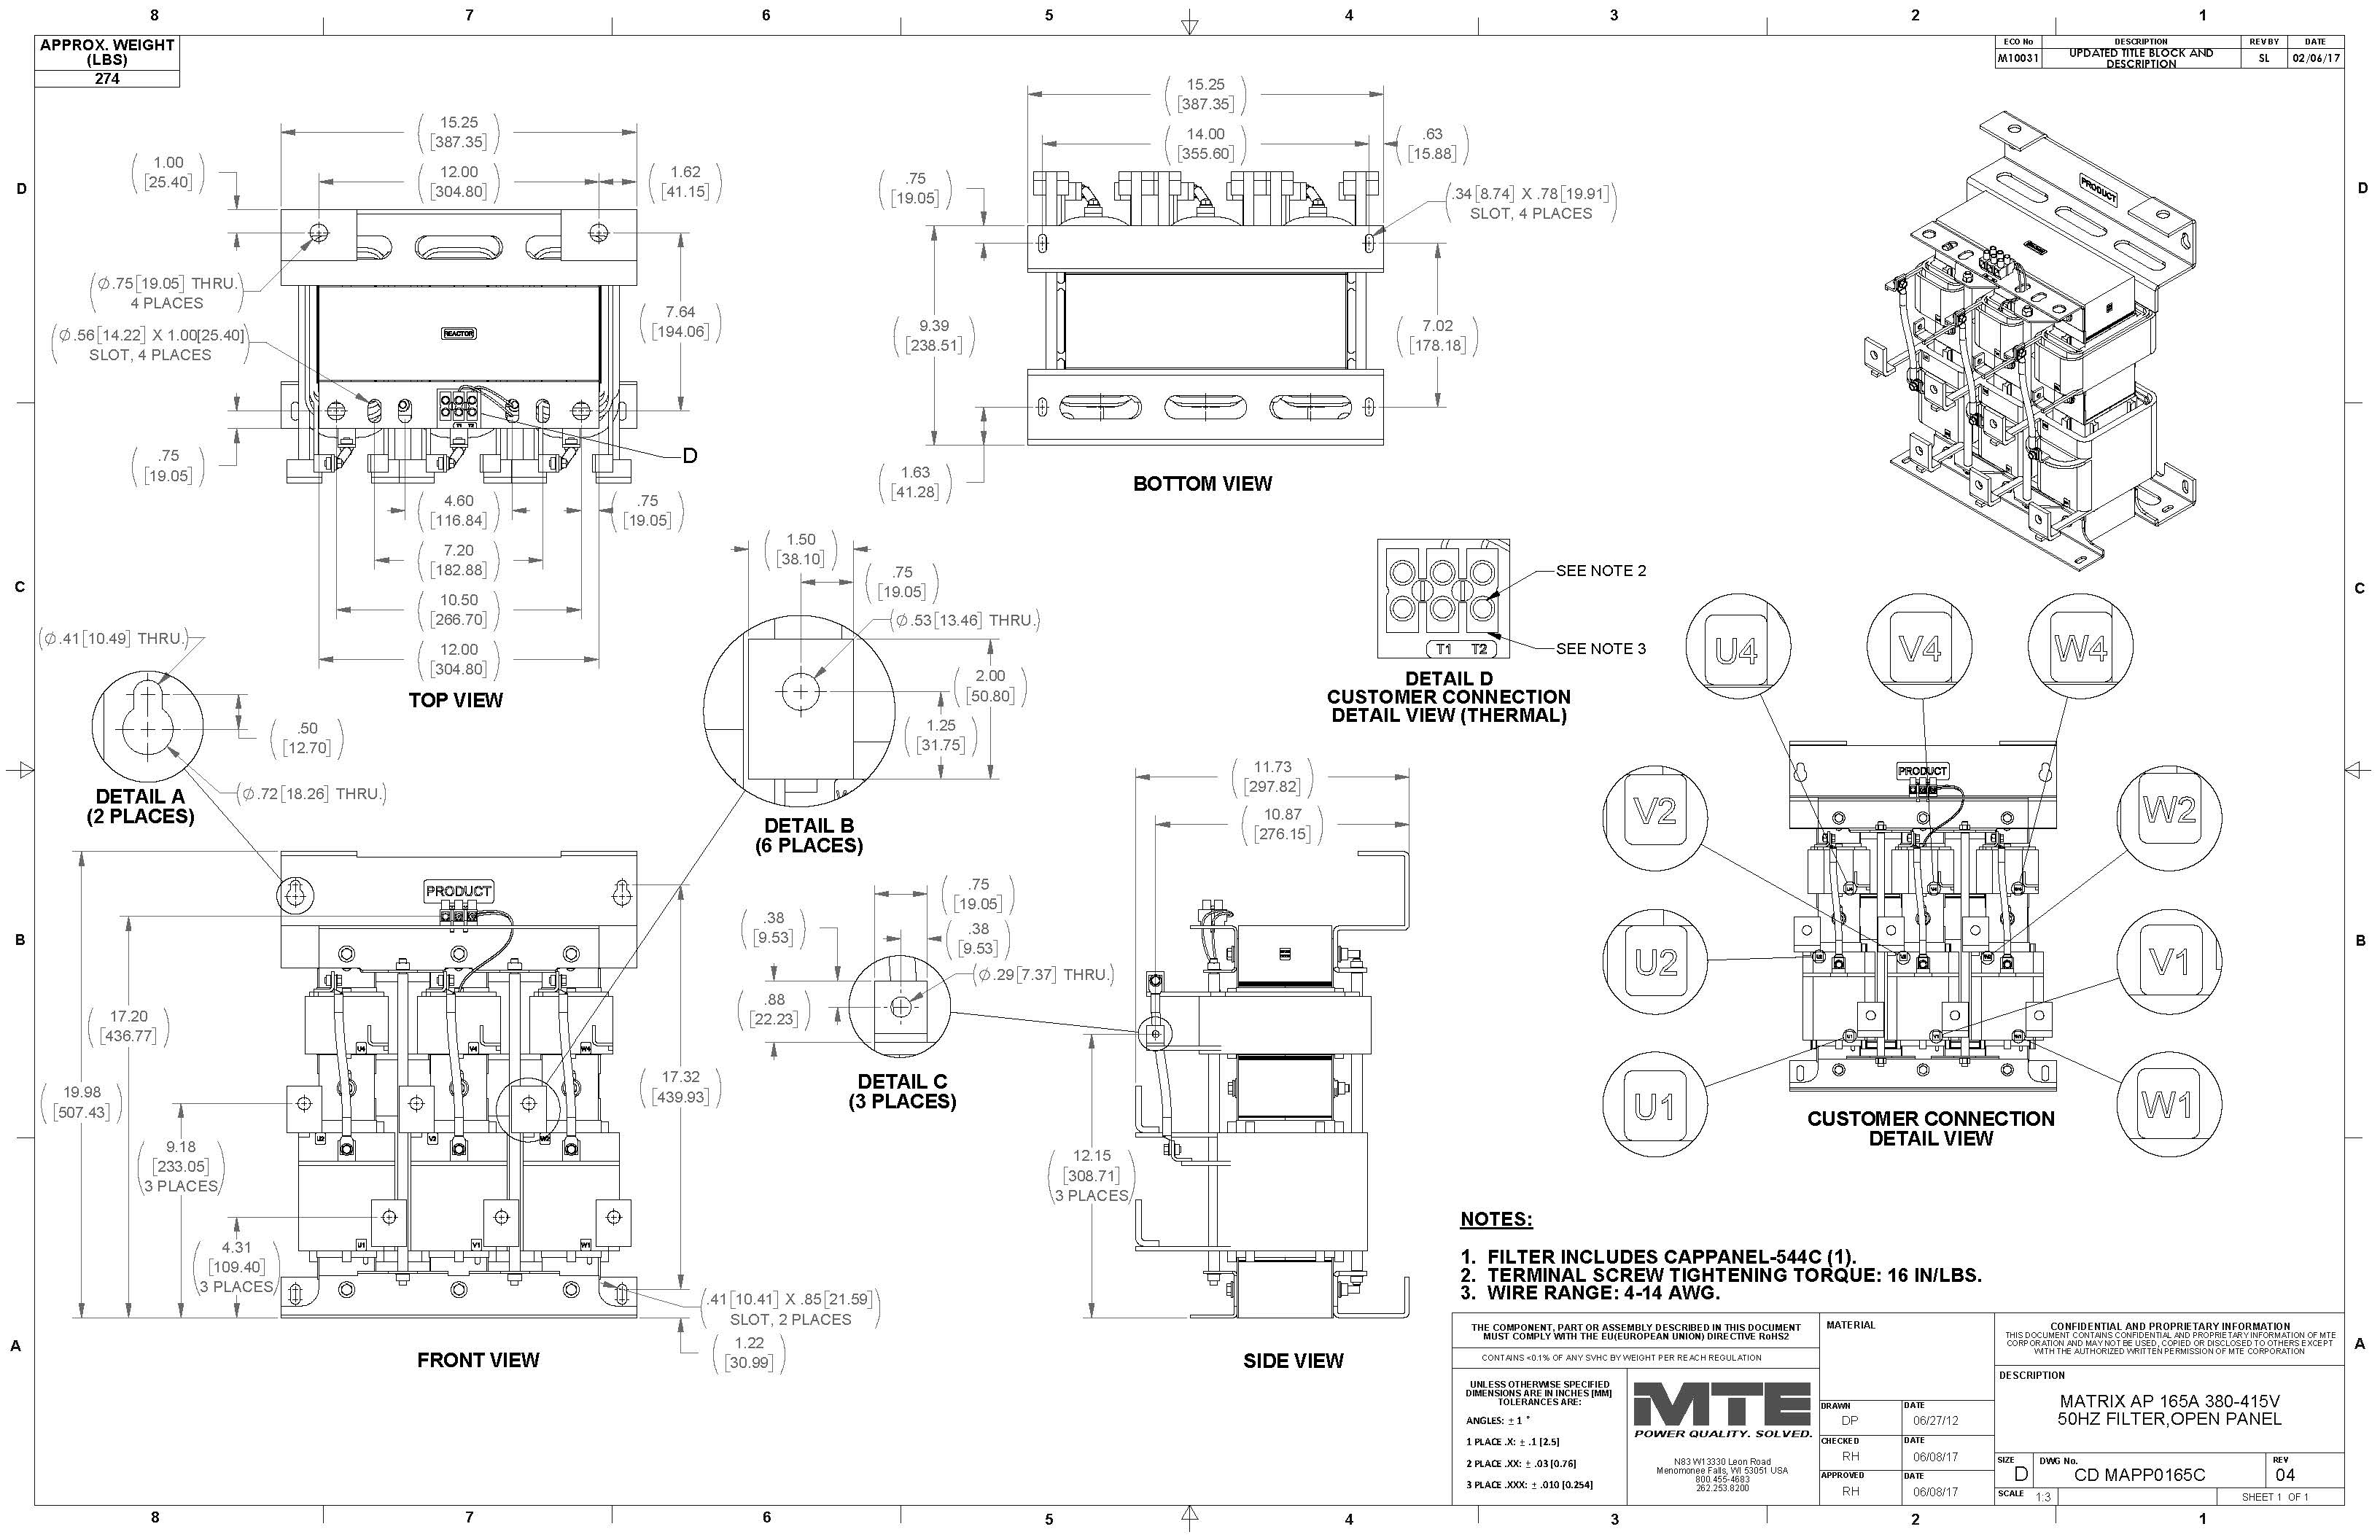 MTE Matrix AP 滤波器 MAPP0165C 的图像